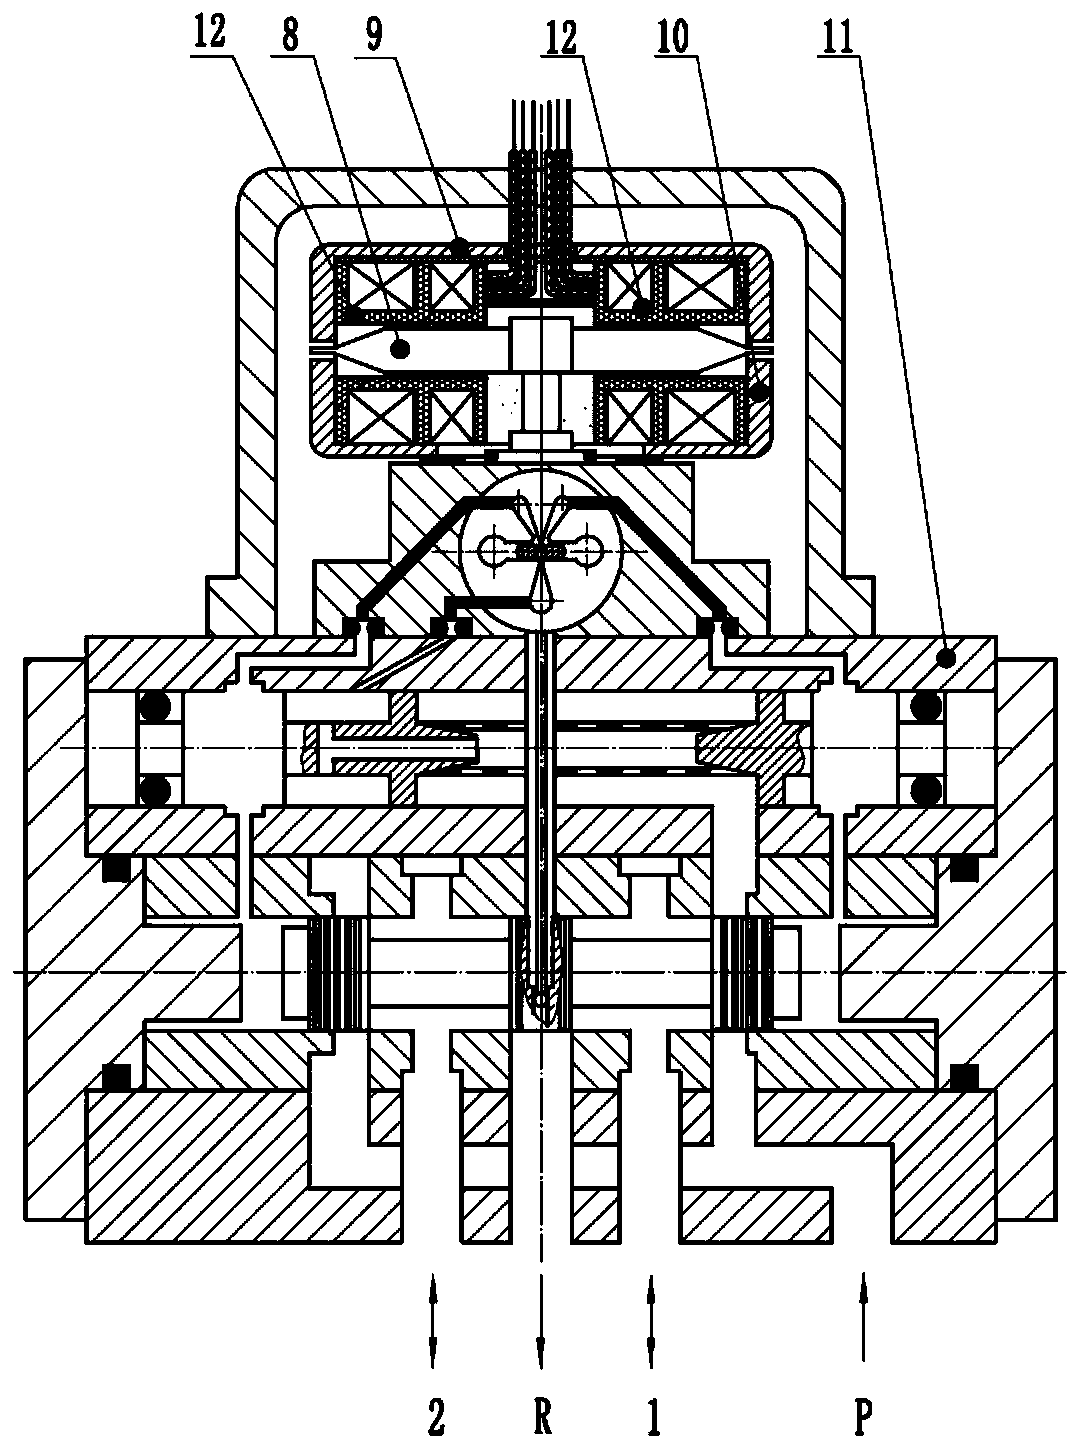 Triplex-redundancy coil structure of electro-hydraulic servo valve